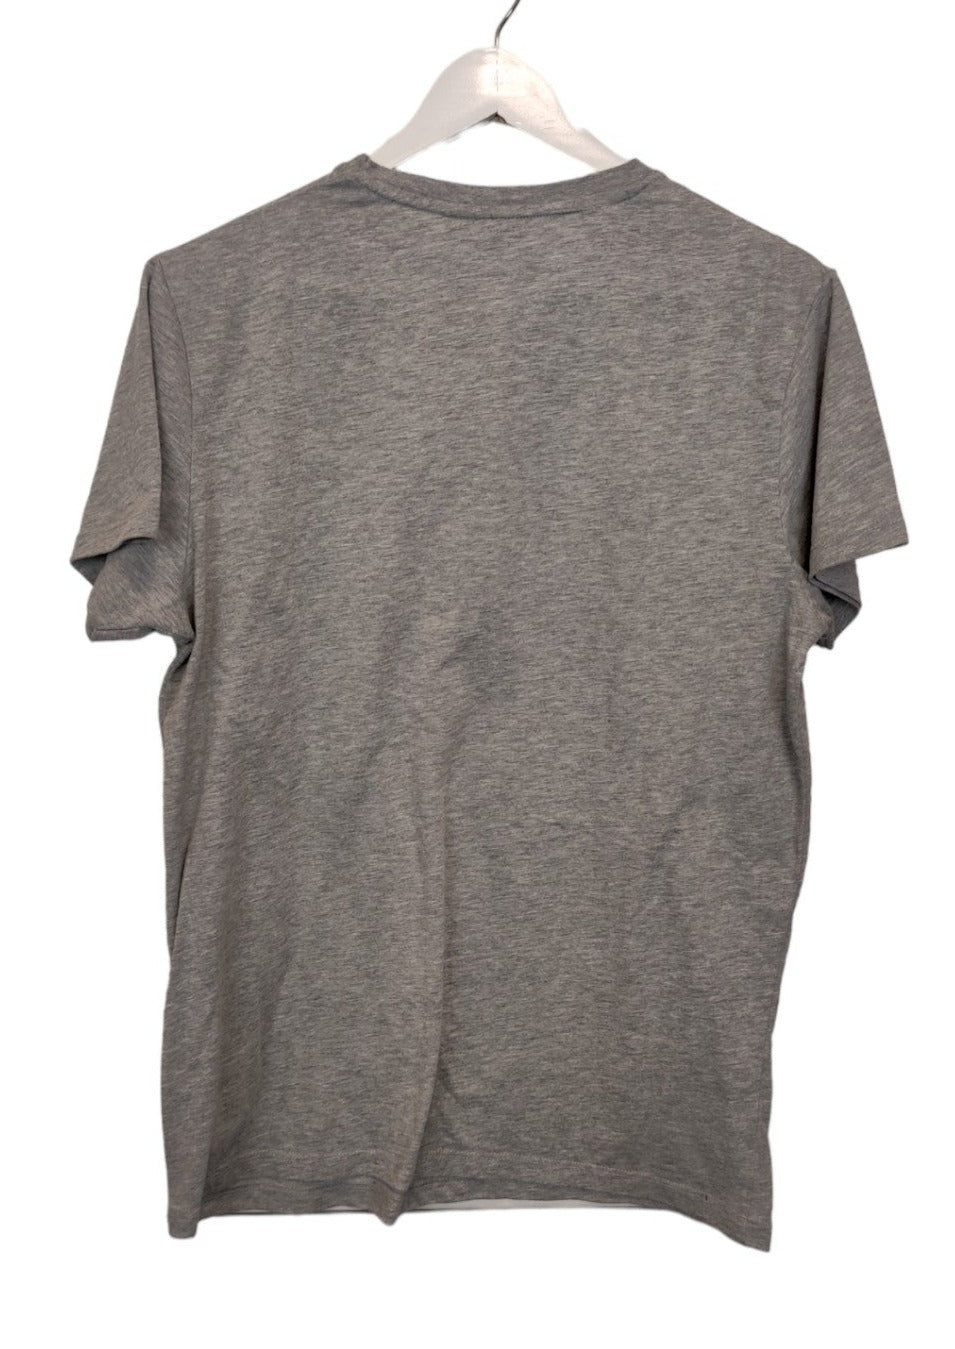 Vintage, Ανδρική Κοντομάνικη Μπλούζα - T- Shirt GHOSTBUSTERS σε Ανοιχτό Γκρι χρώμα (Medium)